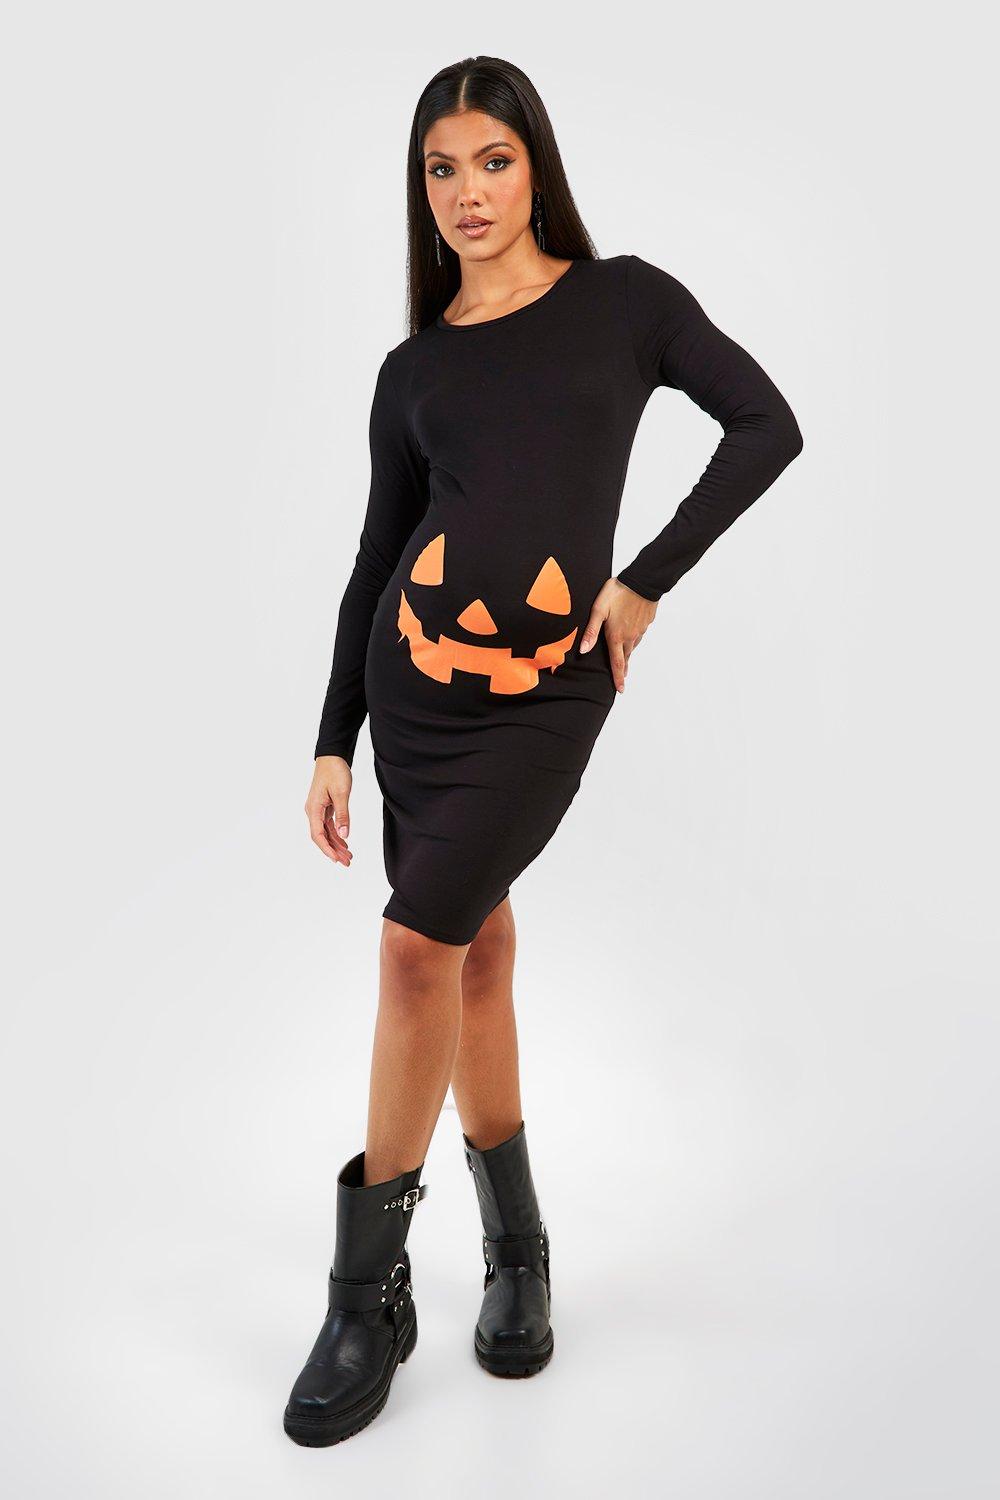 boohoo pumpkin dress